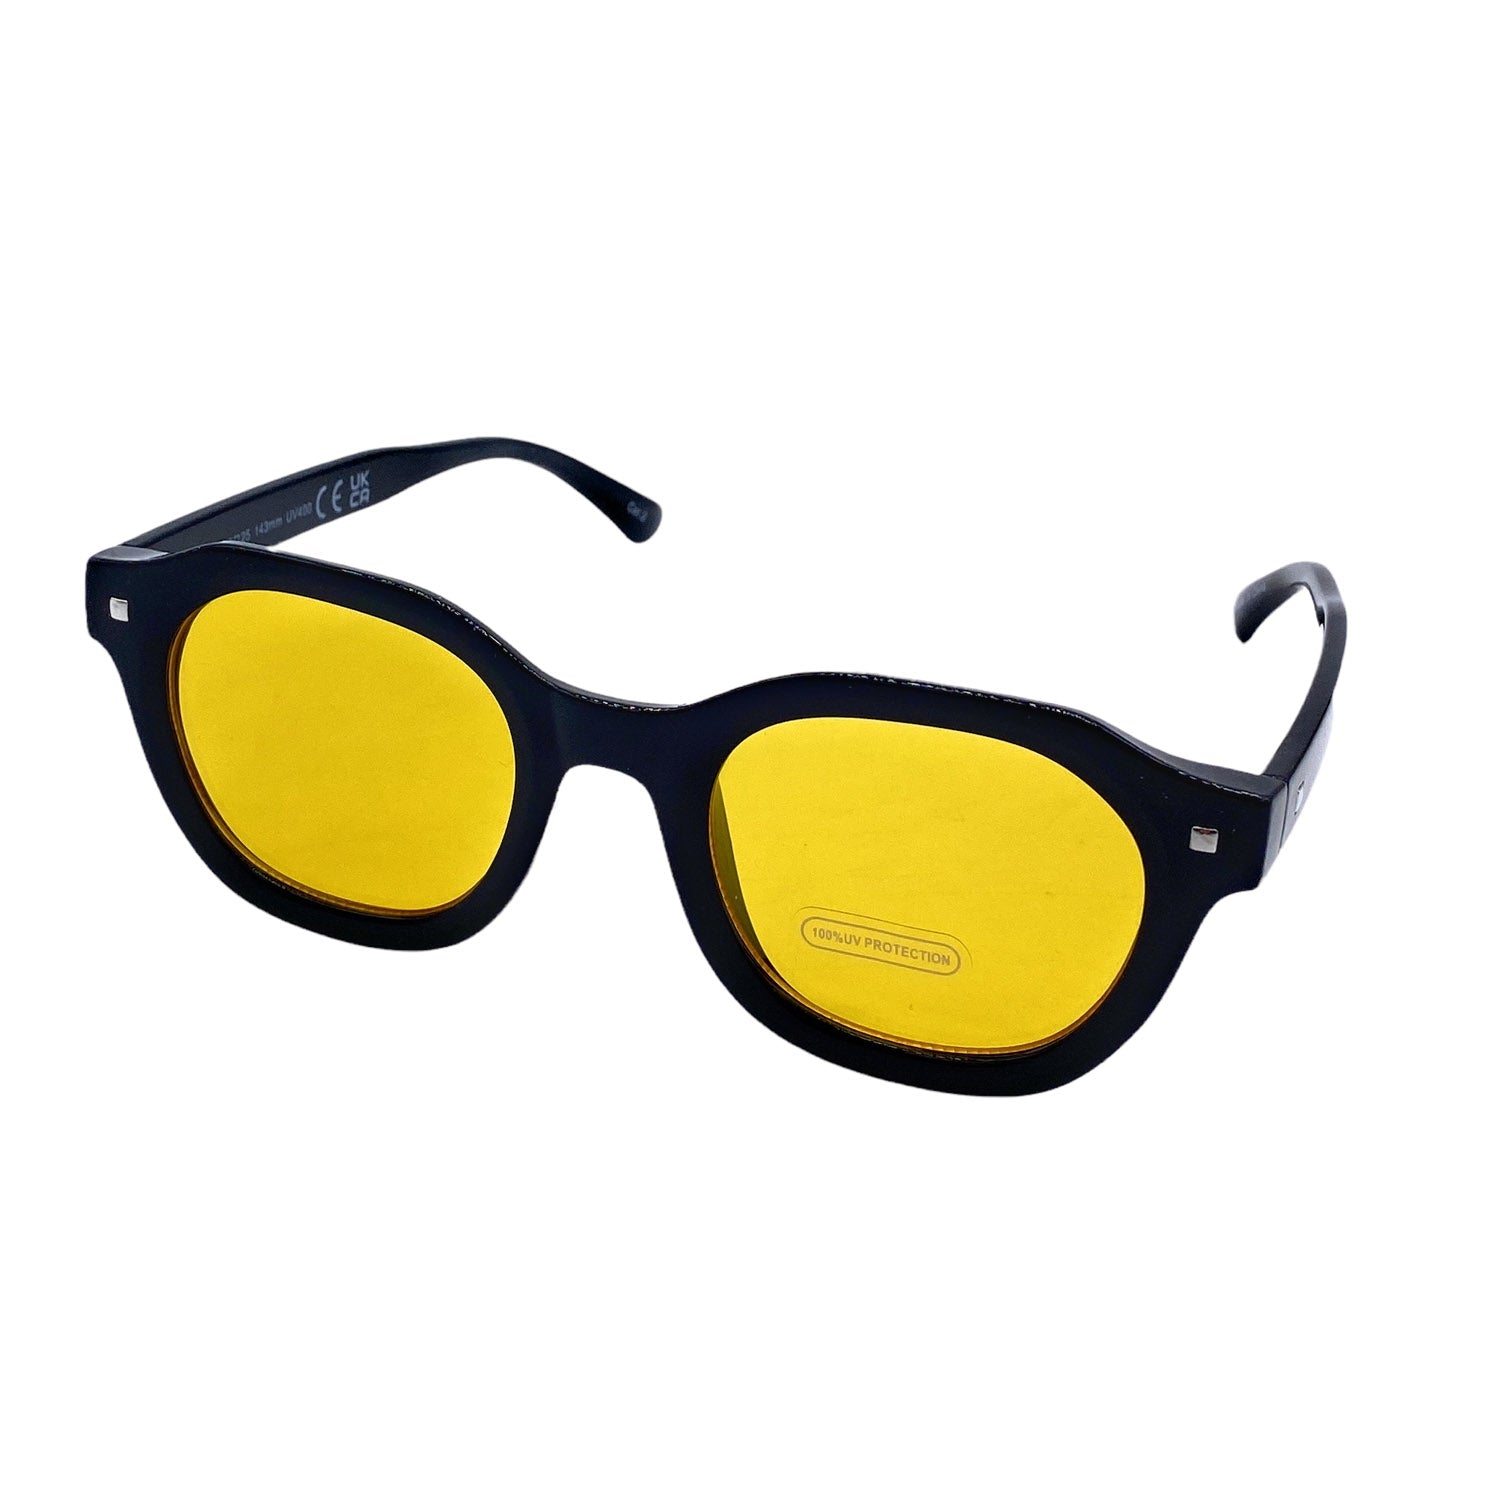 Empire Cove Round Polygon Sunglasses Retro Classic Vintage Shades Sunnies Driving